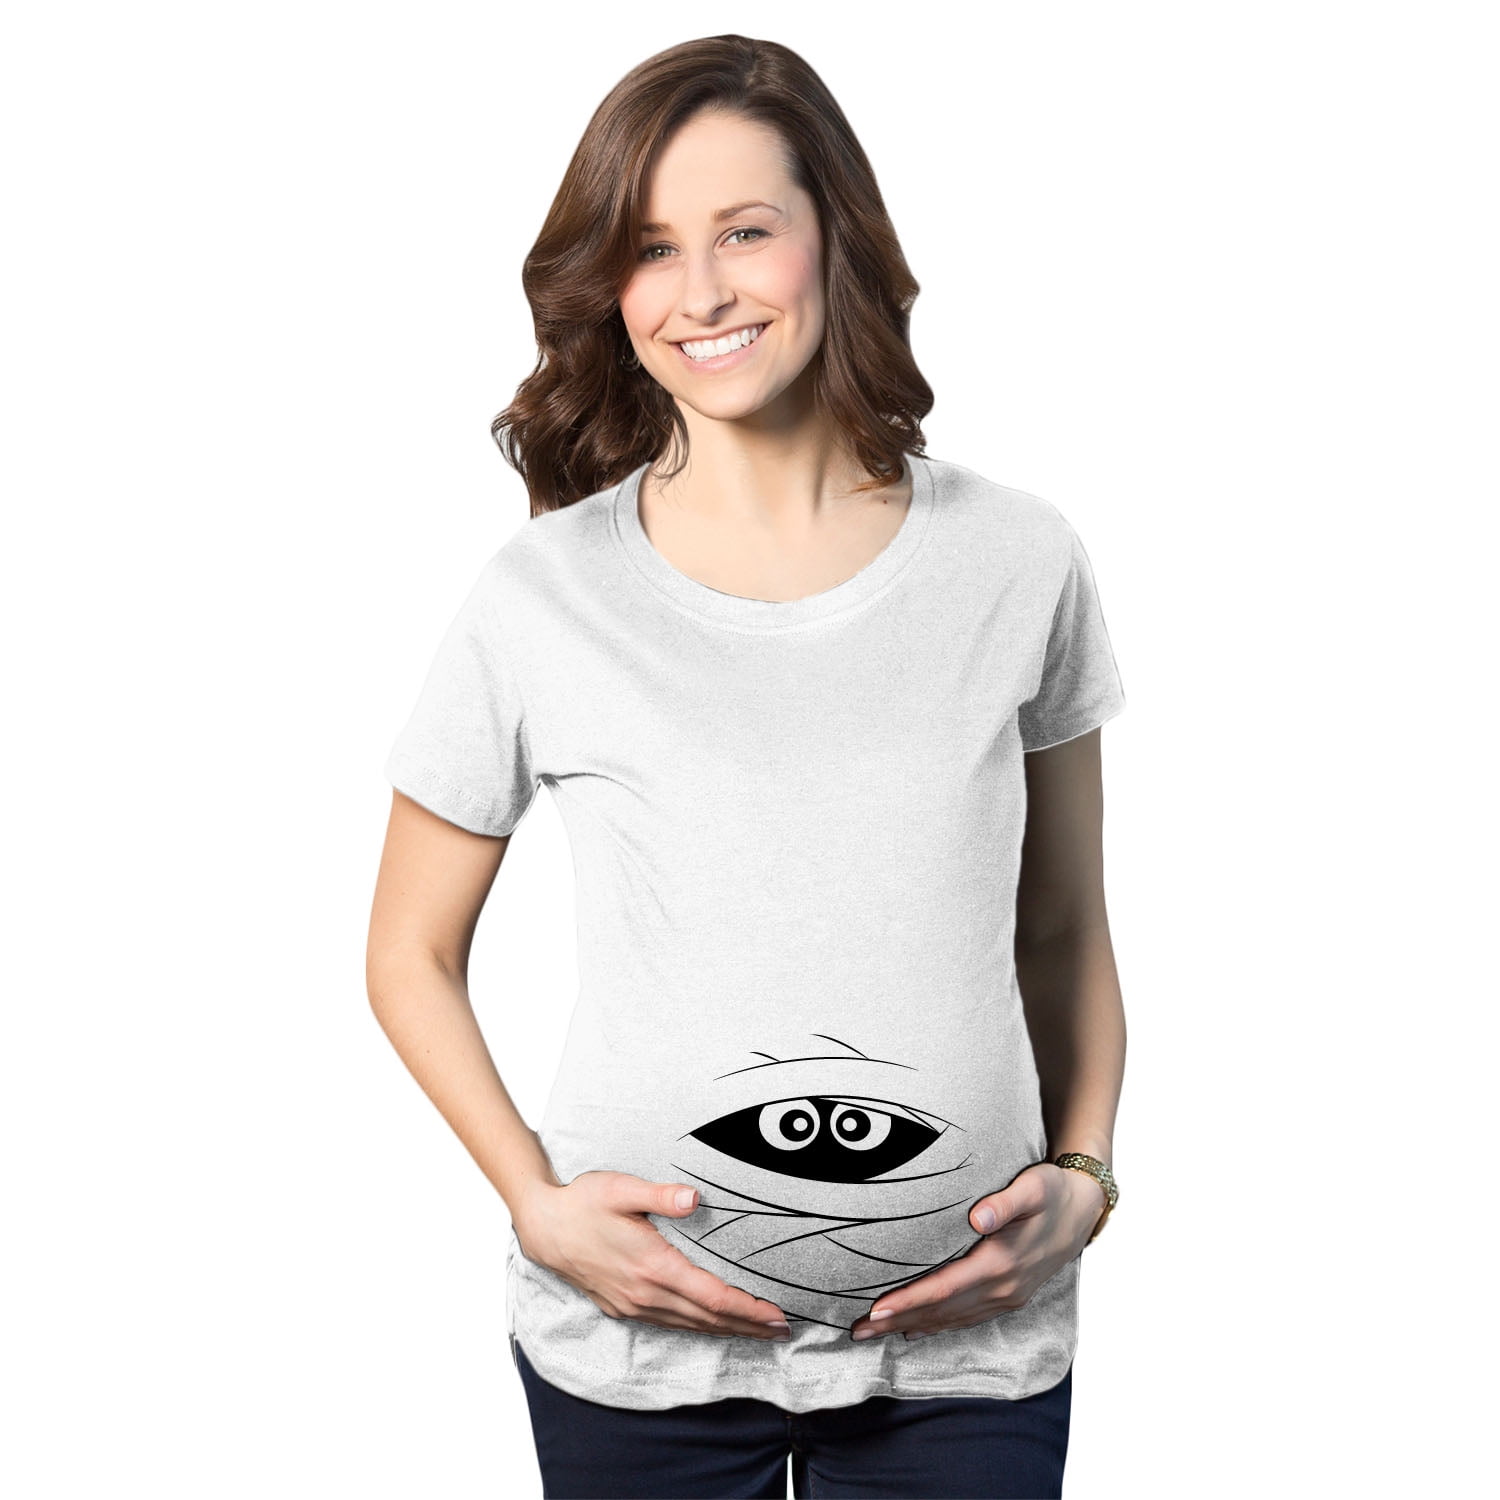 Hula hoop Perch Culling Maternity Peeking Mummy Tshirt Cute Funny Halloween Movie Pregnancy Tee -  Walmart.com